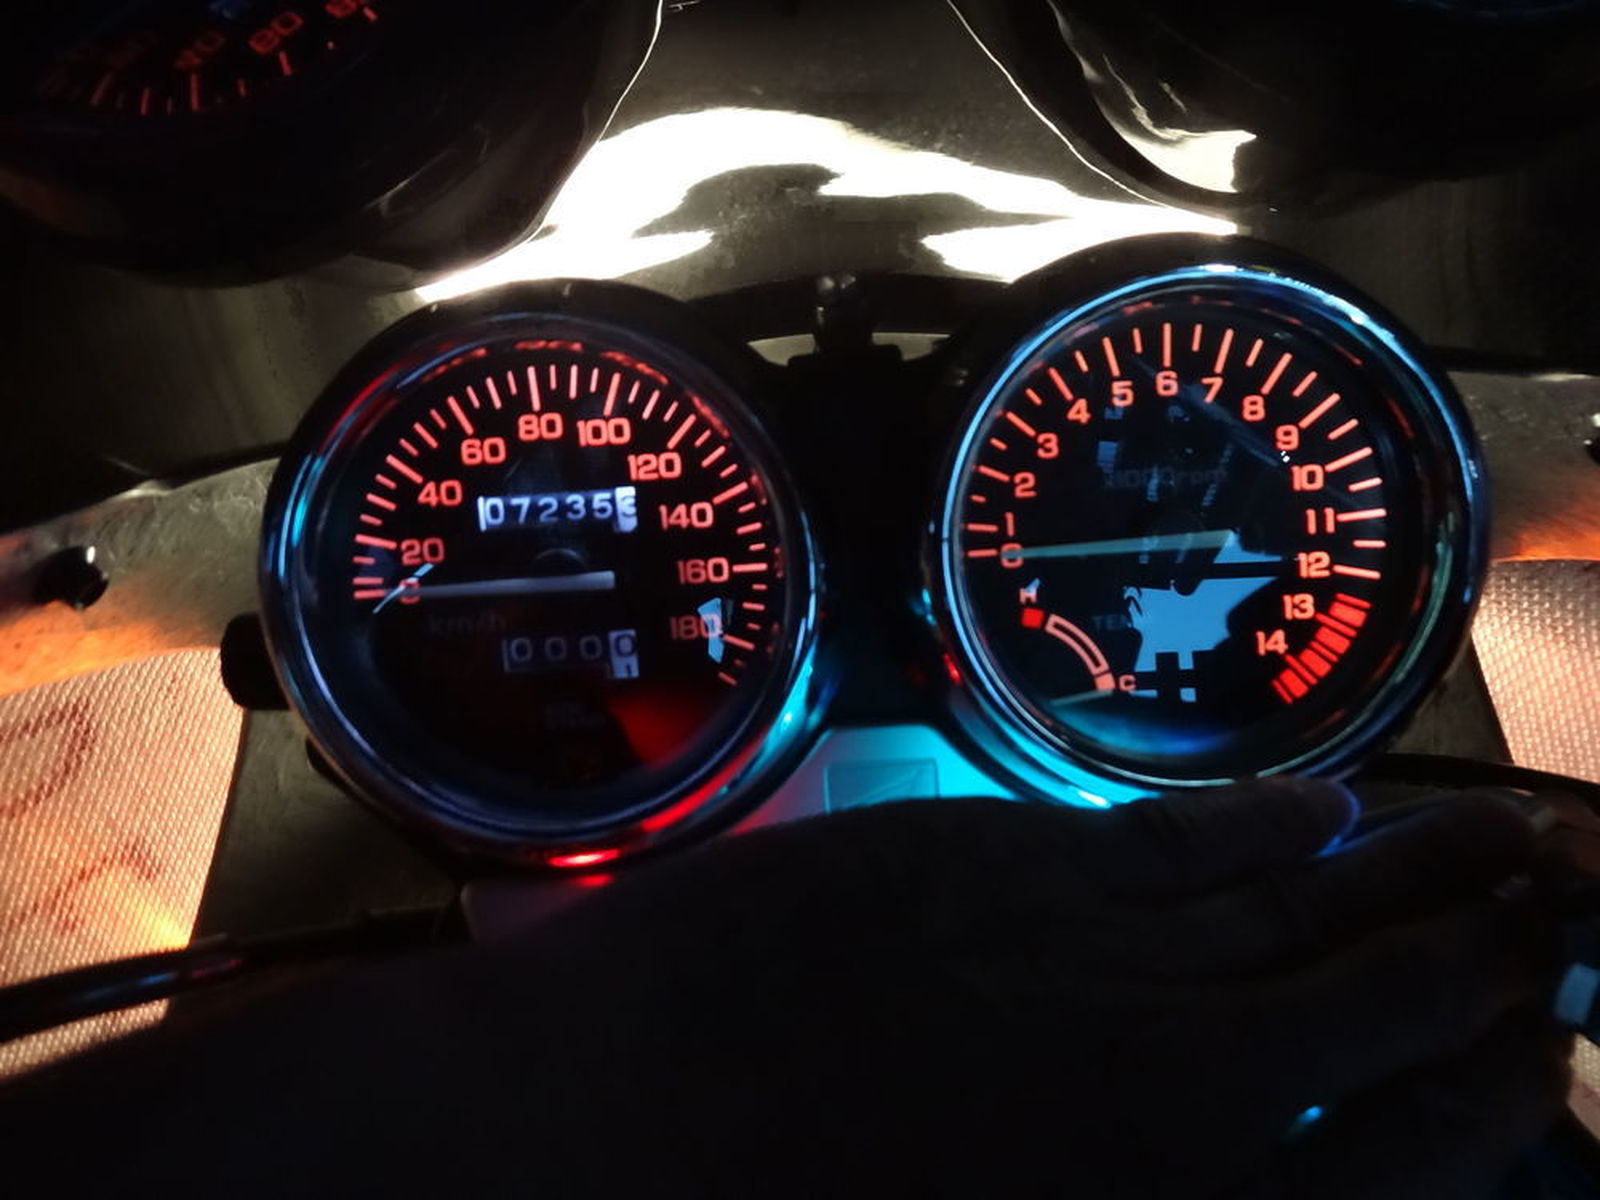 Honda Cb400スーパーフォア メーター内部を加工 照明効果の改良 新ｌｅｄ球に変更照明効果アップを狙う ウェビックコミュニティ